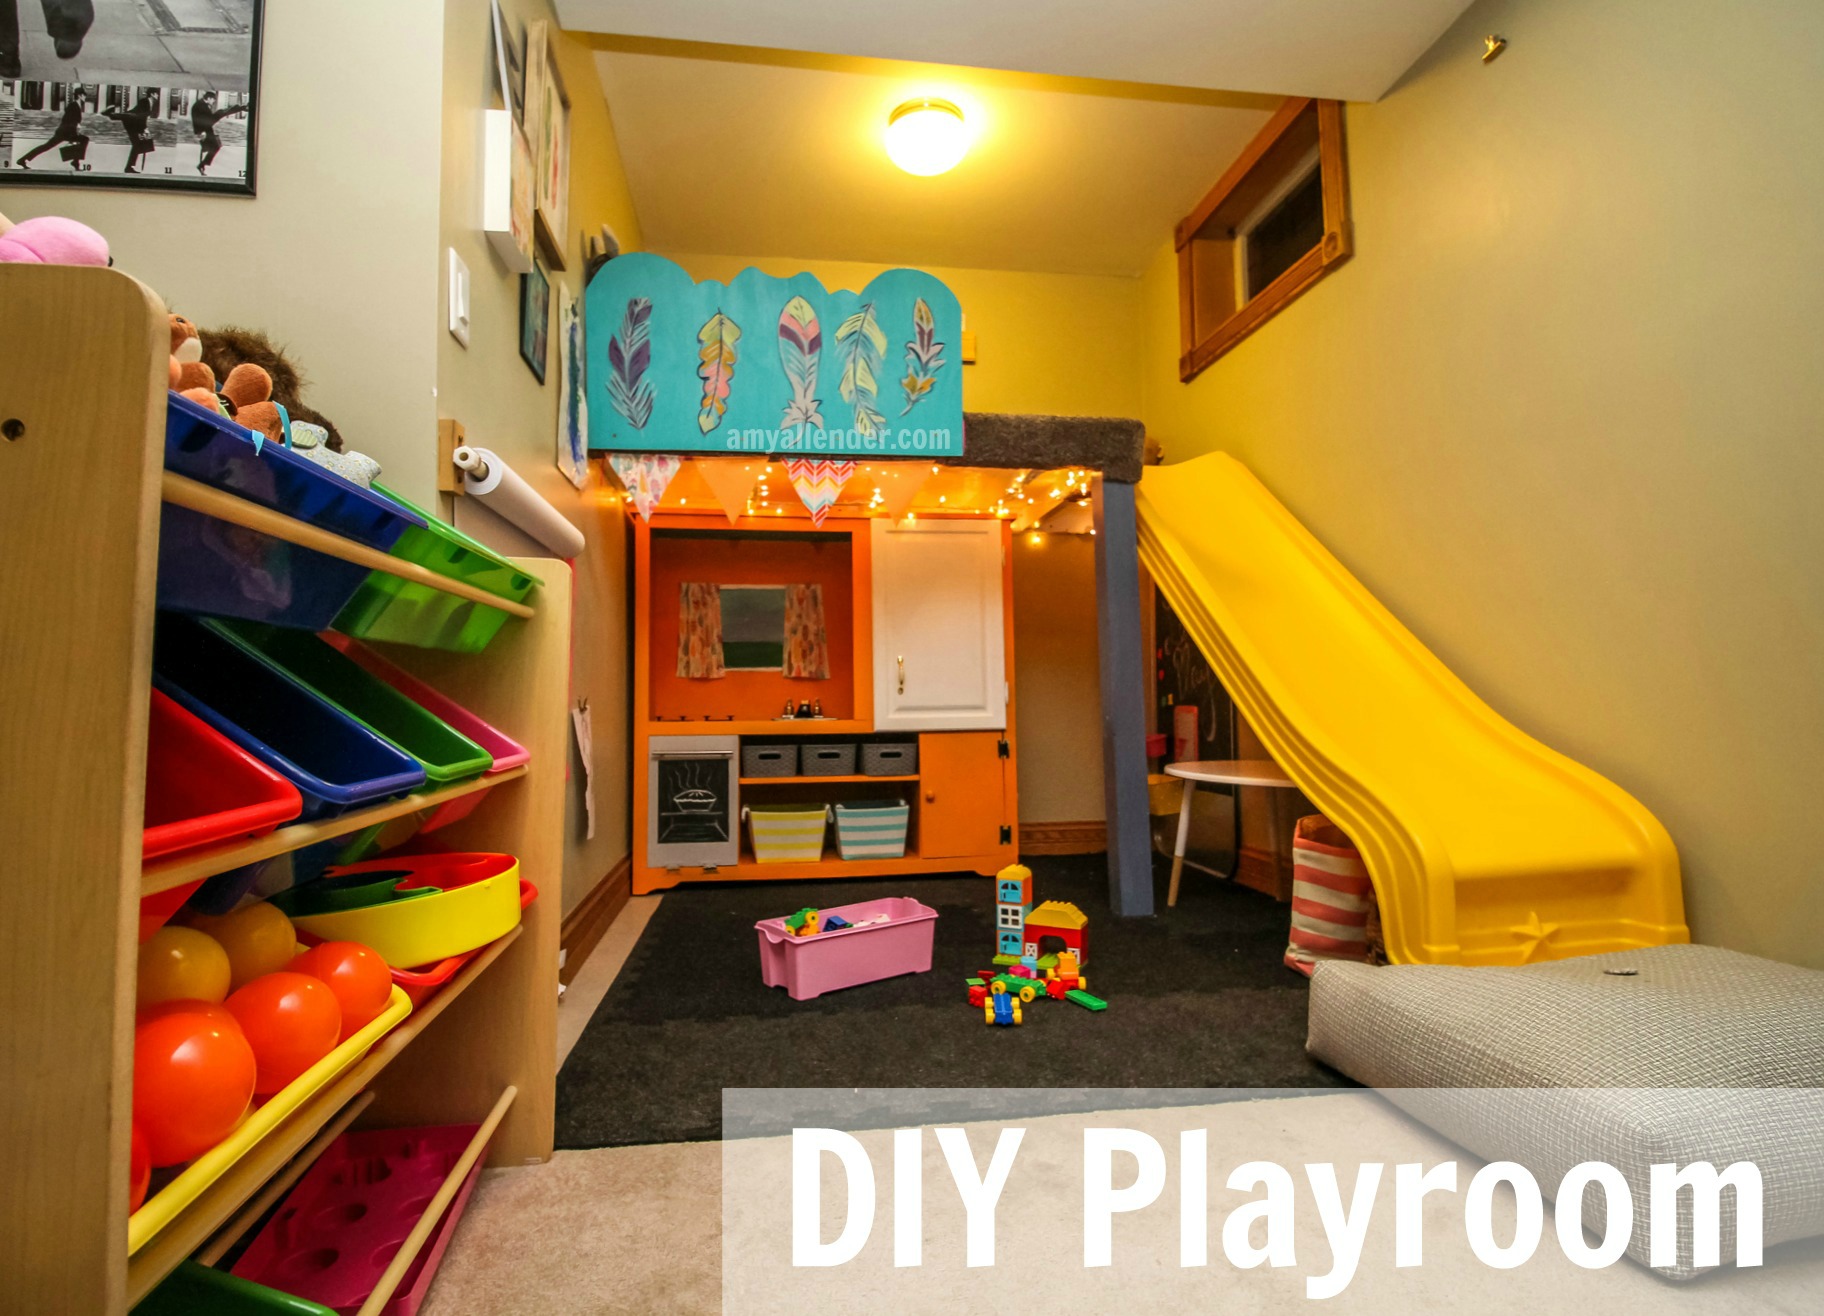 diy-playroom-the-big-reveal-amy-allender